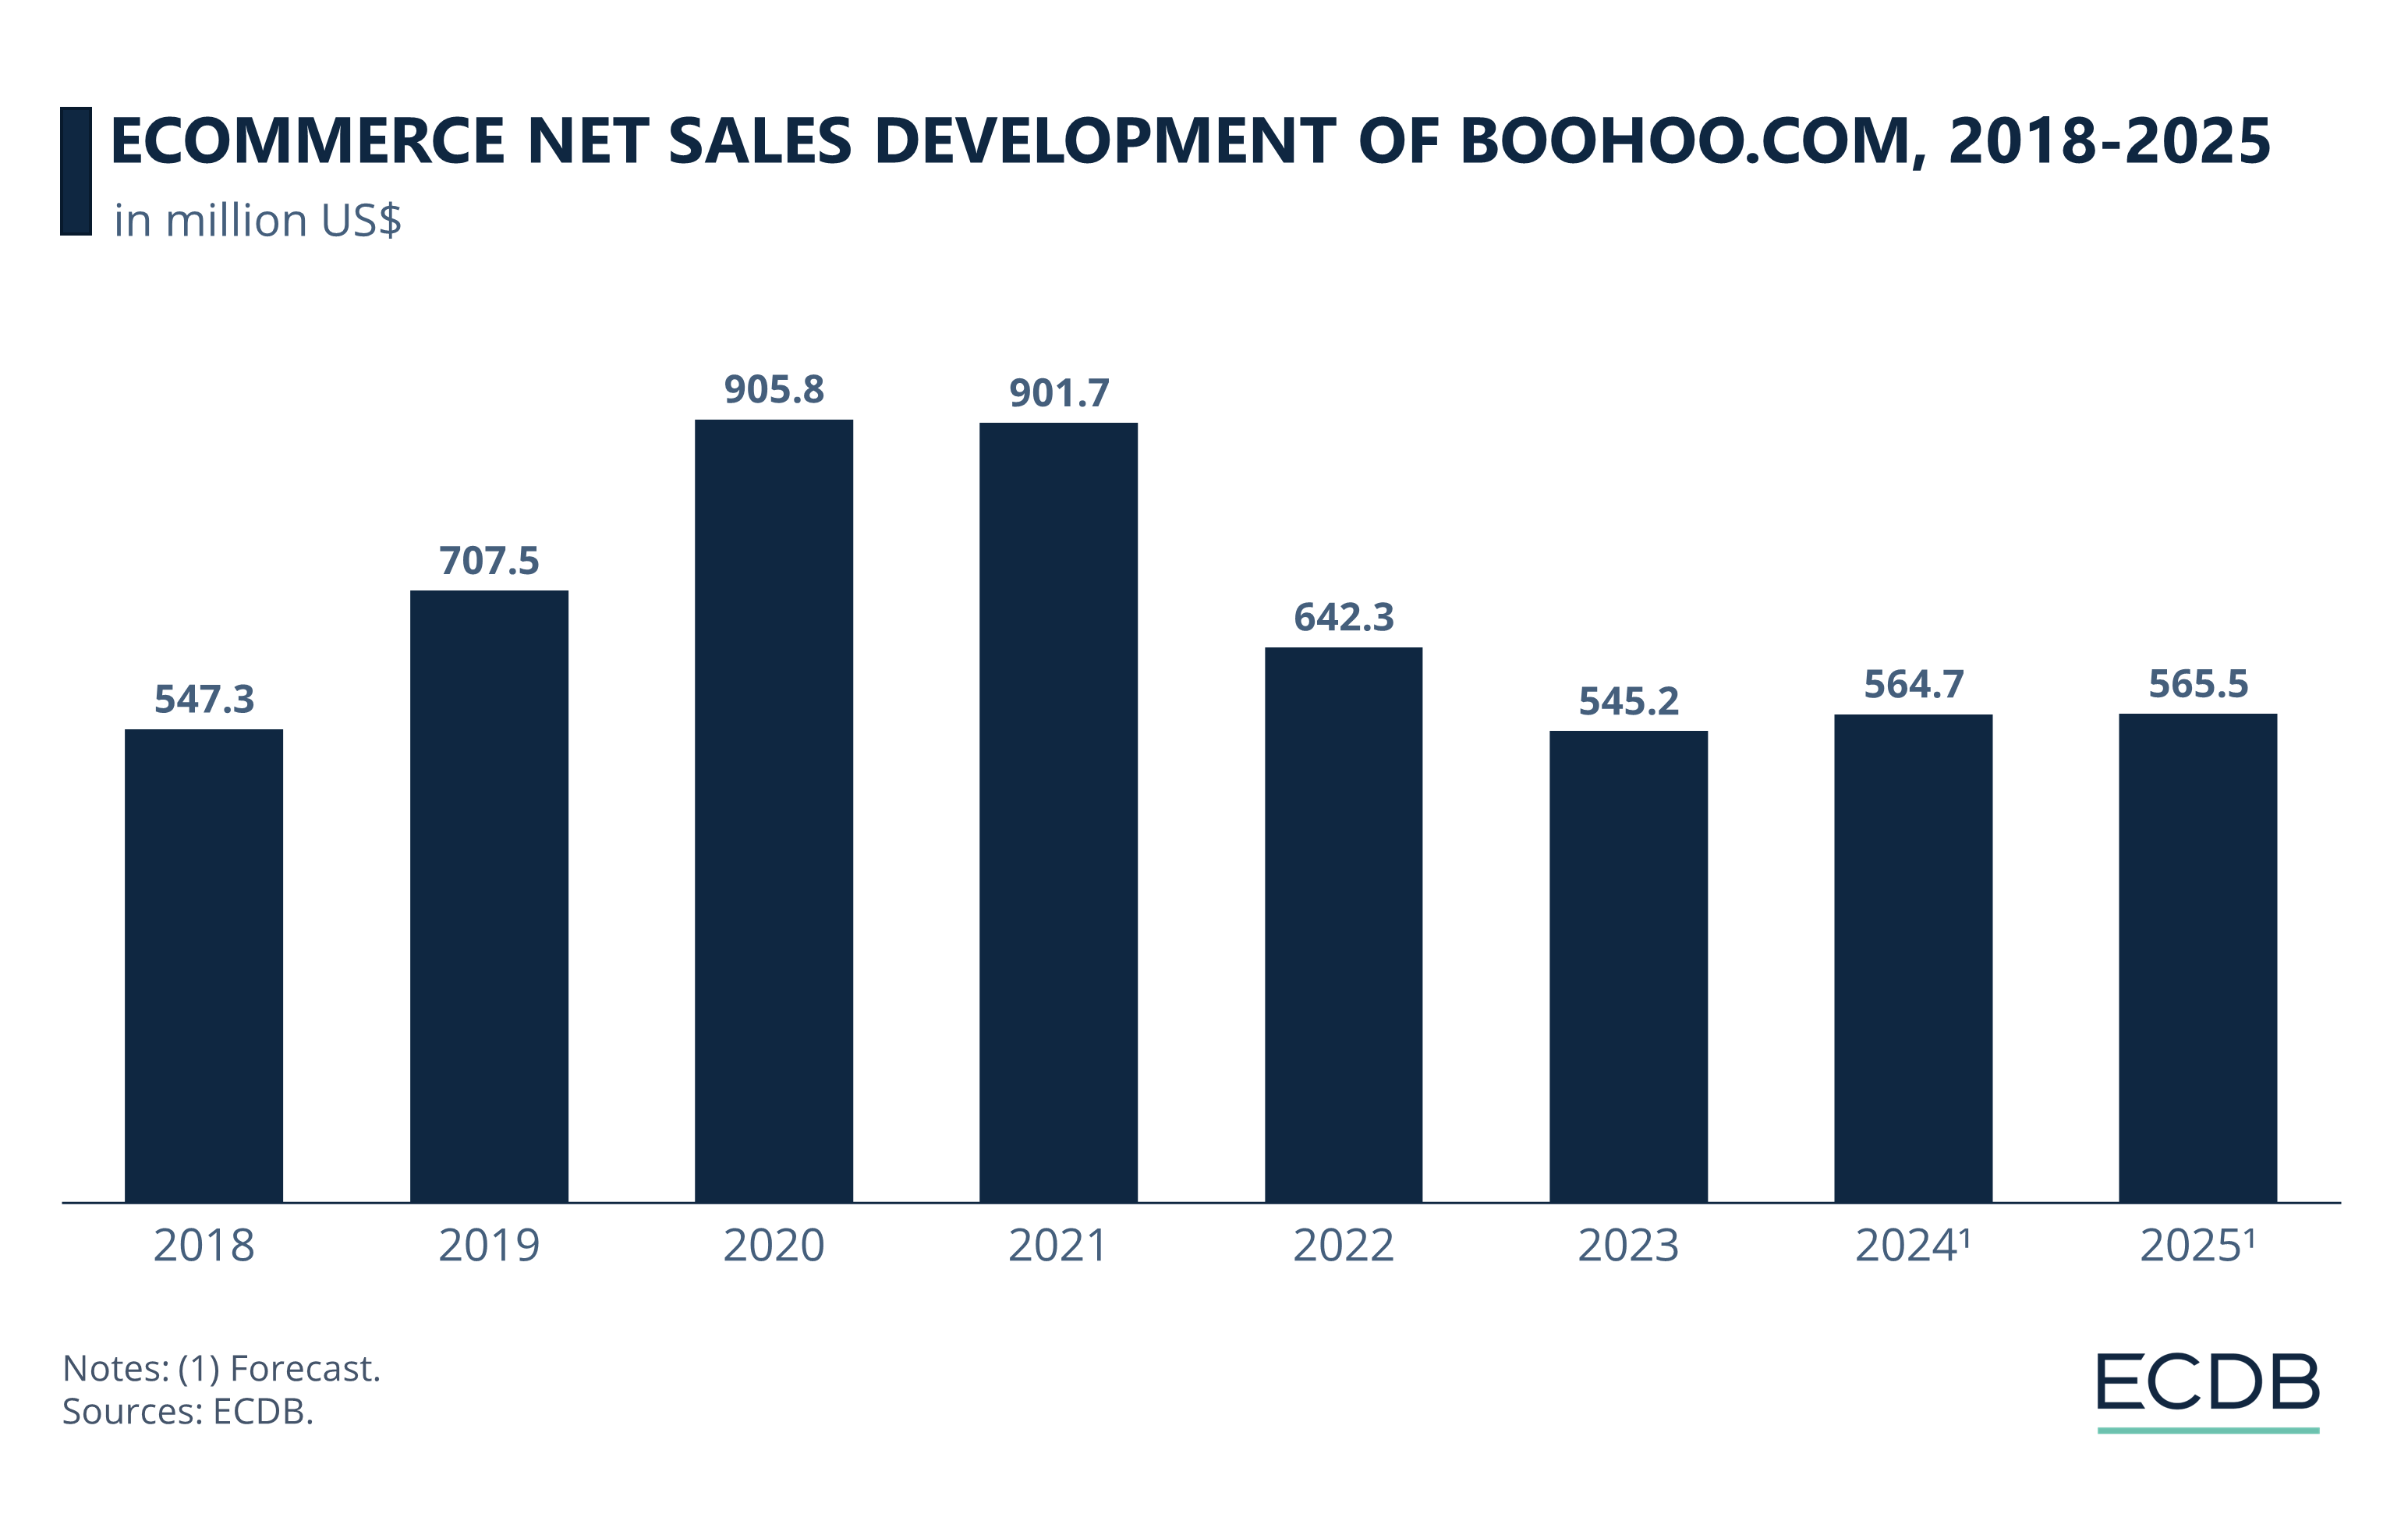 eCommerce Net Sales Development of Boohoo.com, 2018-2025